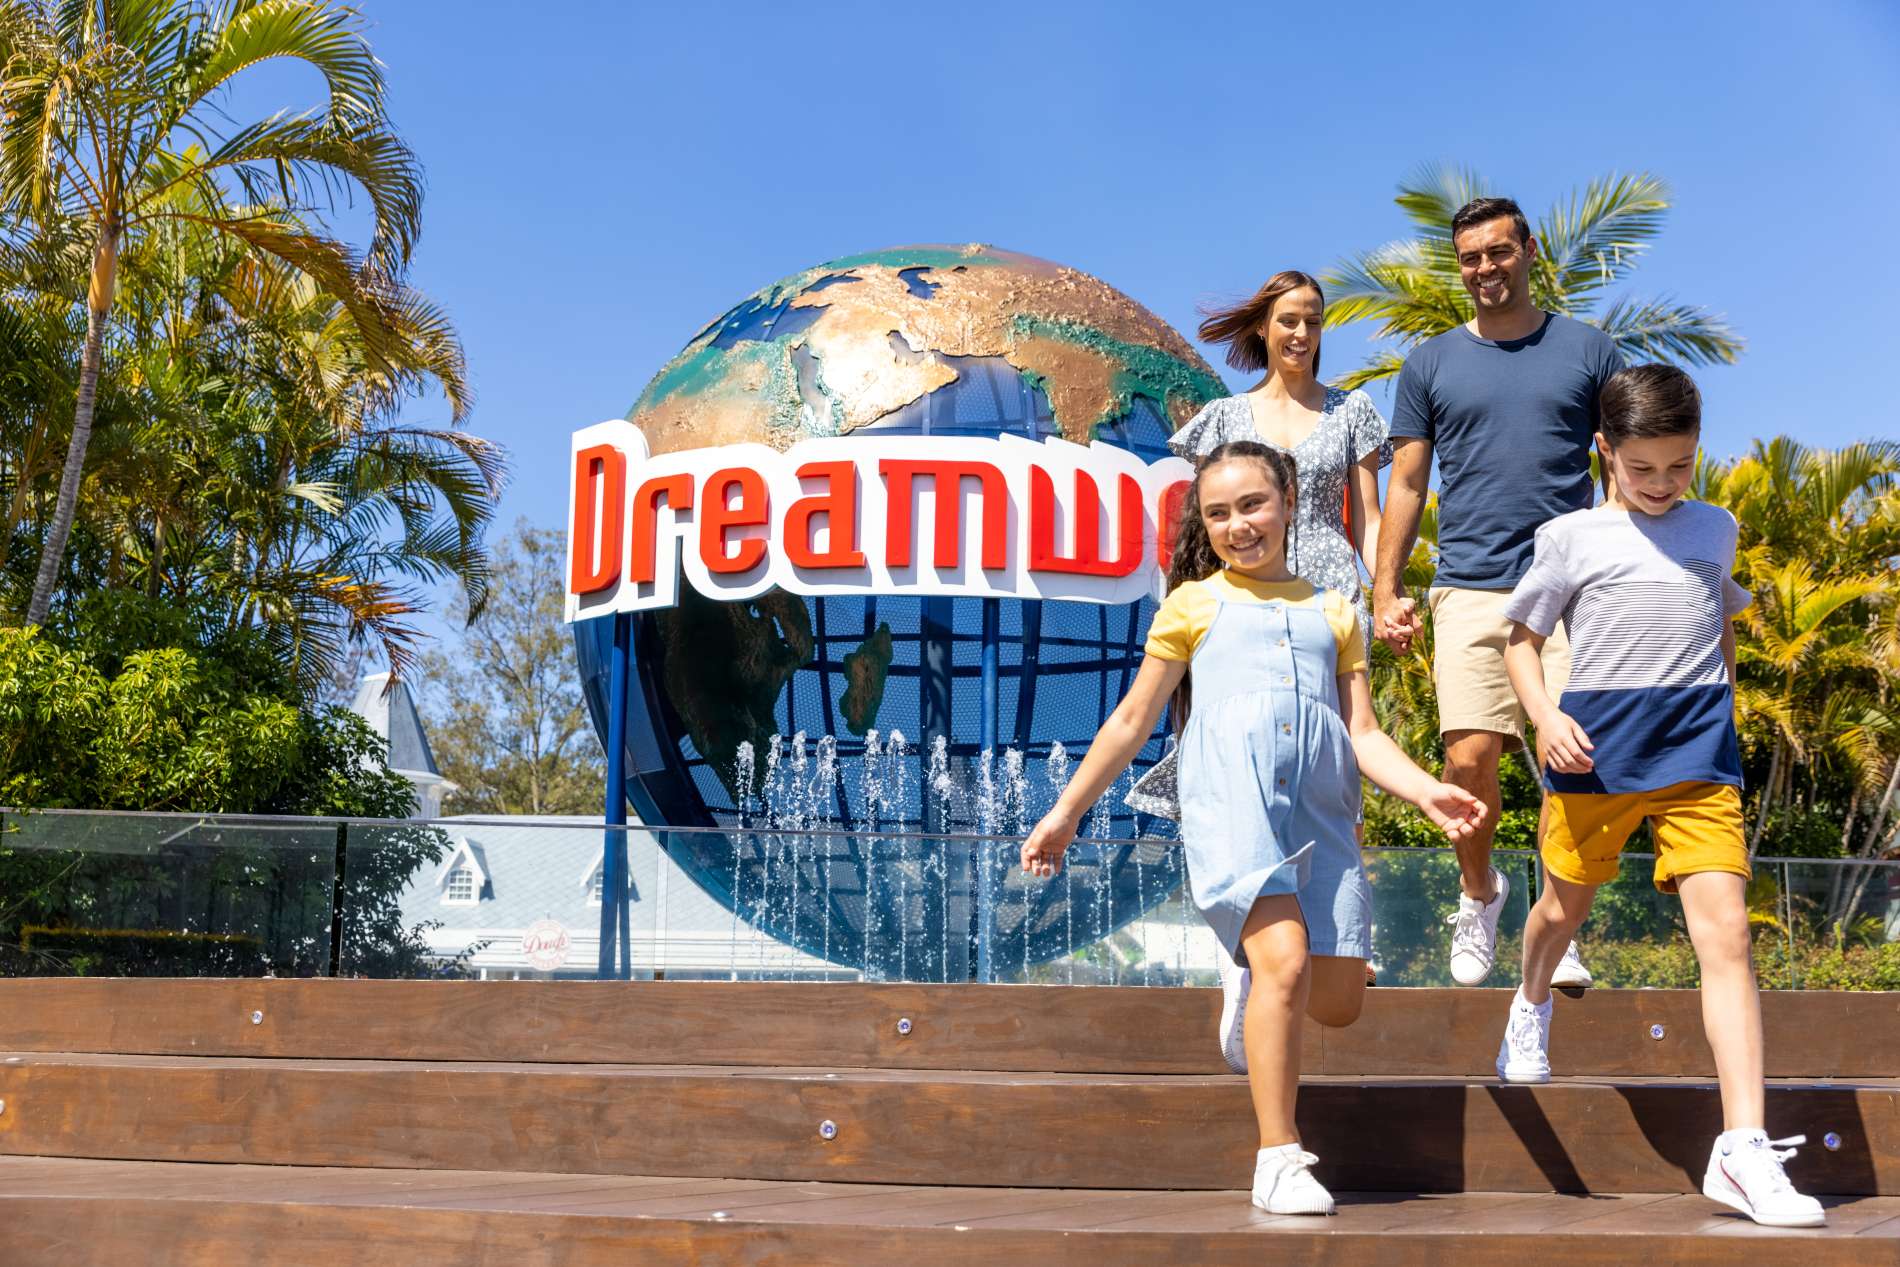 Dreamworld Gold Coast Australias 1 Theme Park